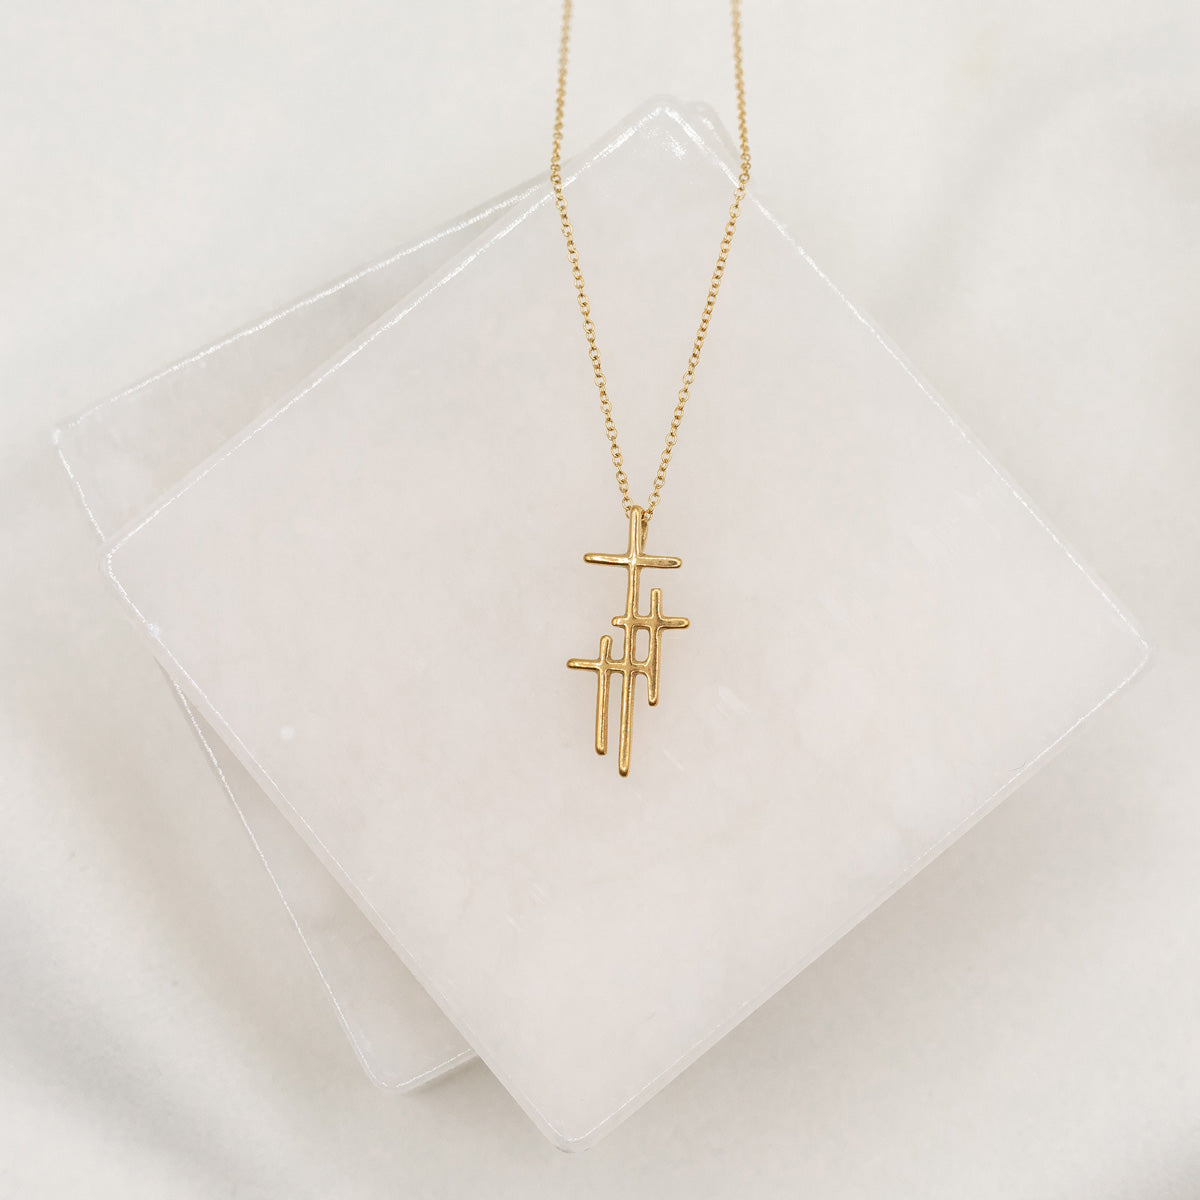 Faithful Light Three Cross Necklace by My Saint My Hero